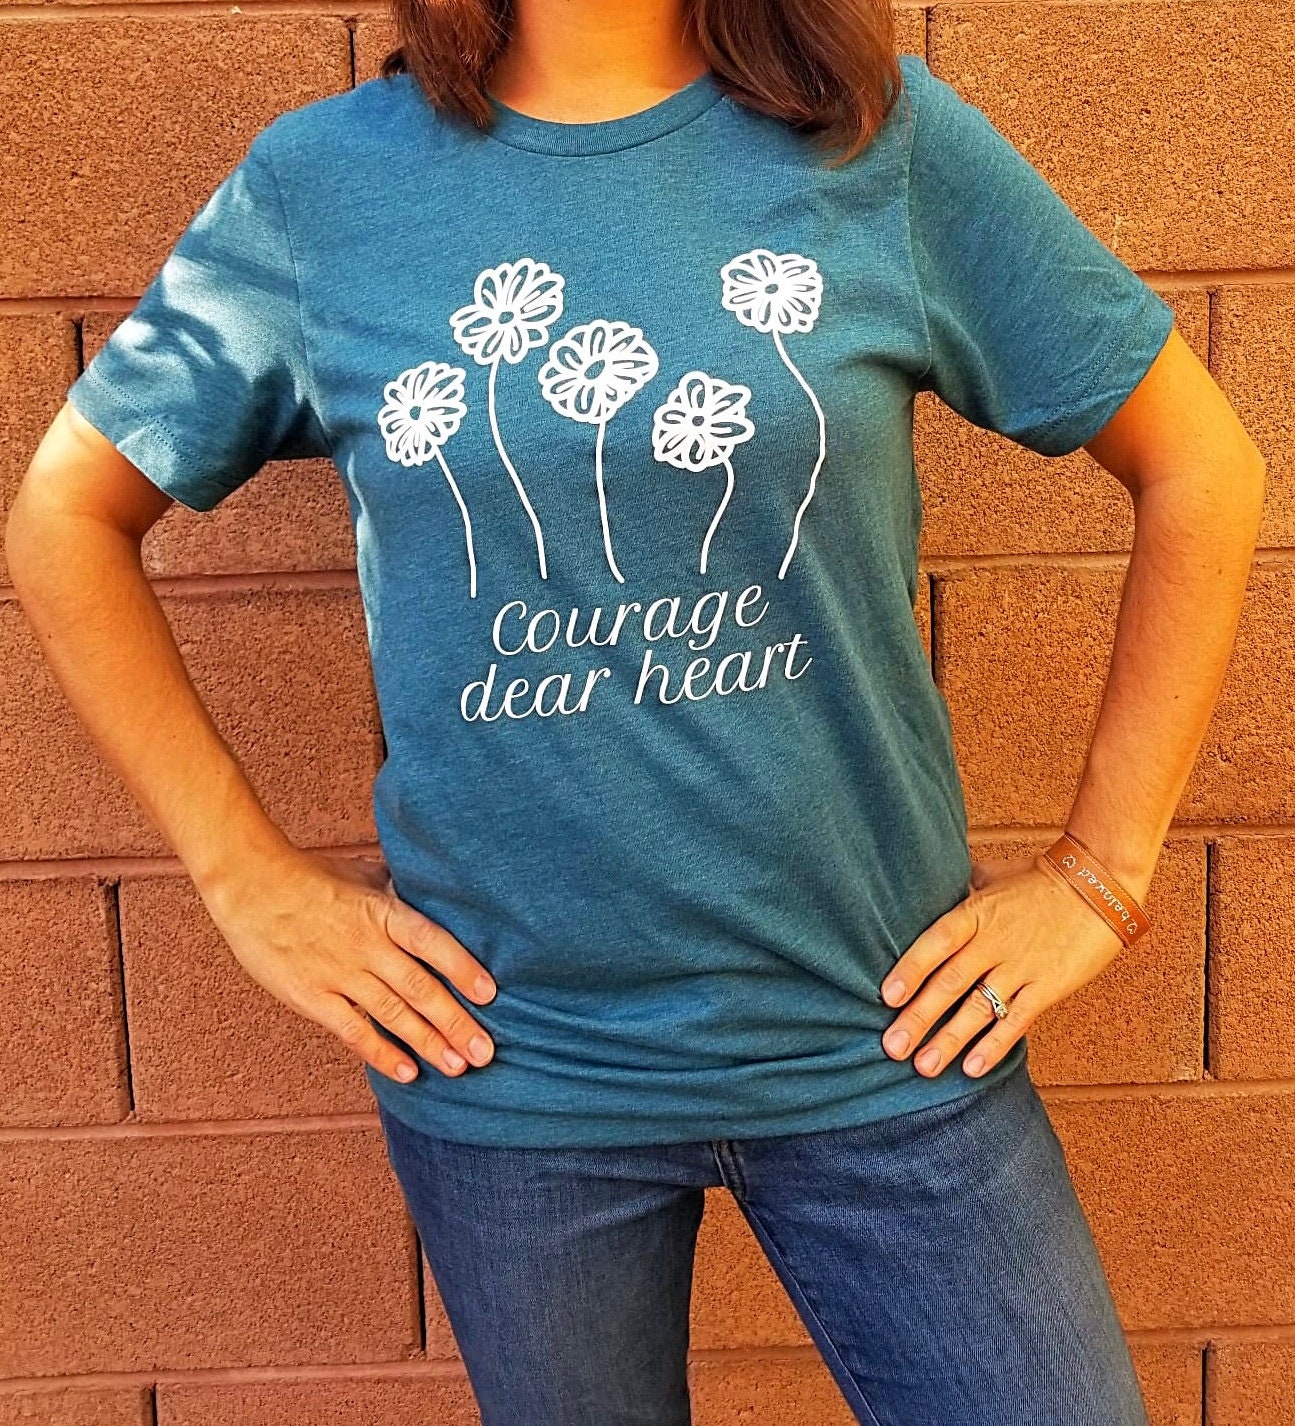 Courage dear heart T-shirt - Catholic Mom gift